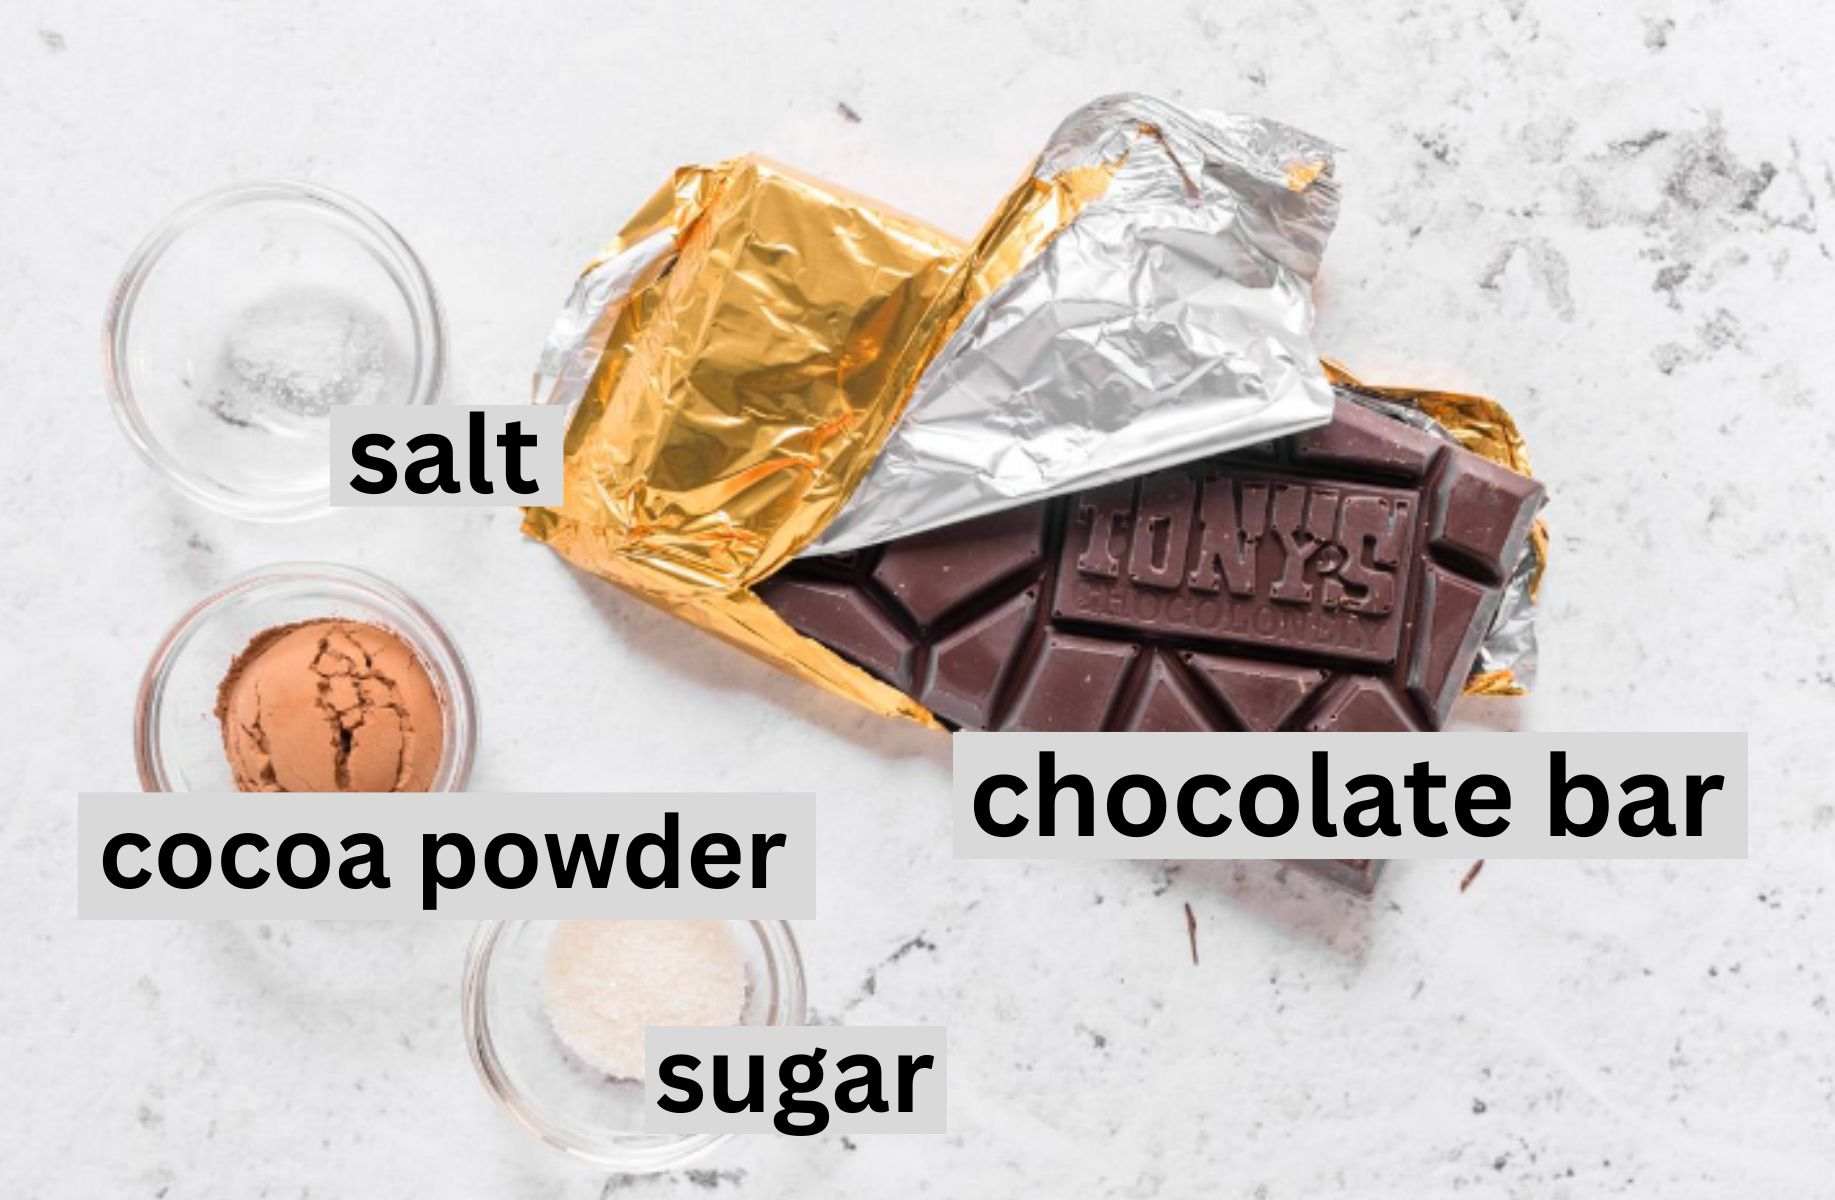 chocolate bar, sugar, cocoa powder, and salt on a table